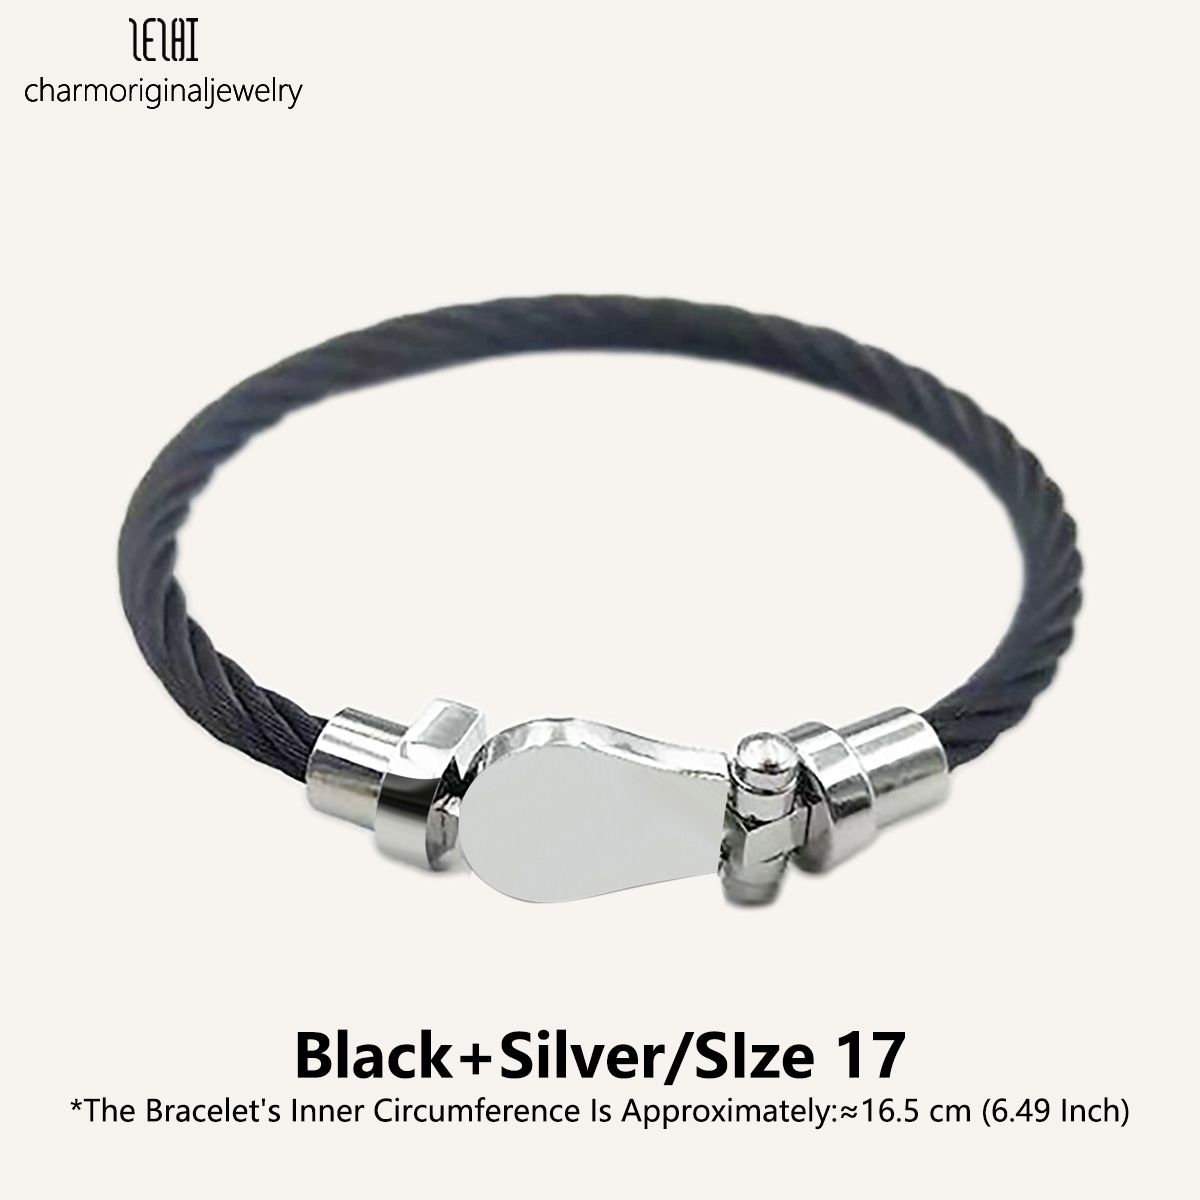 Size d'argento nero17